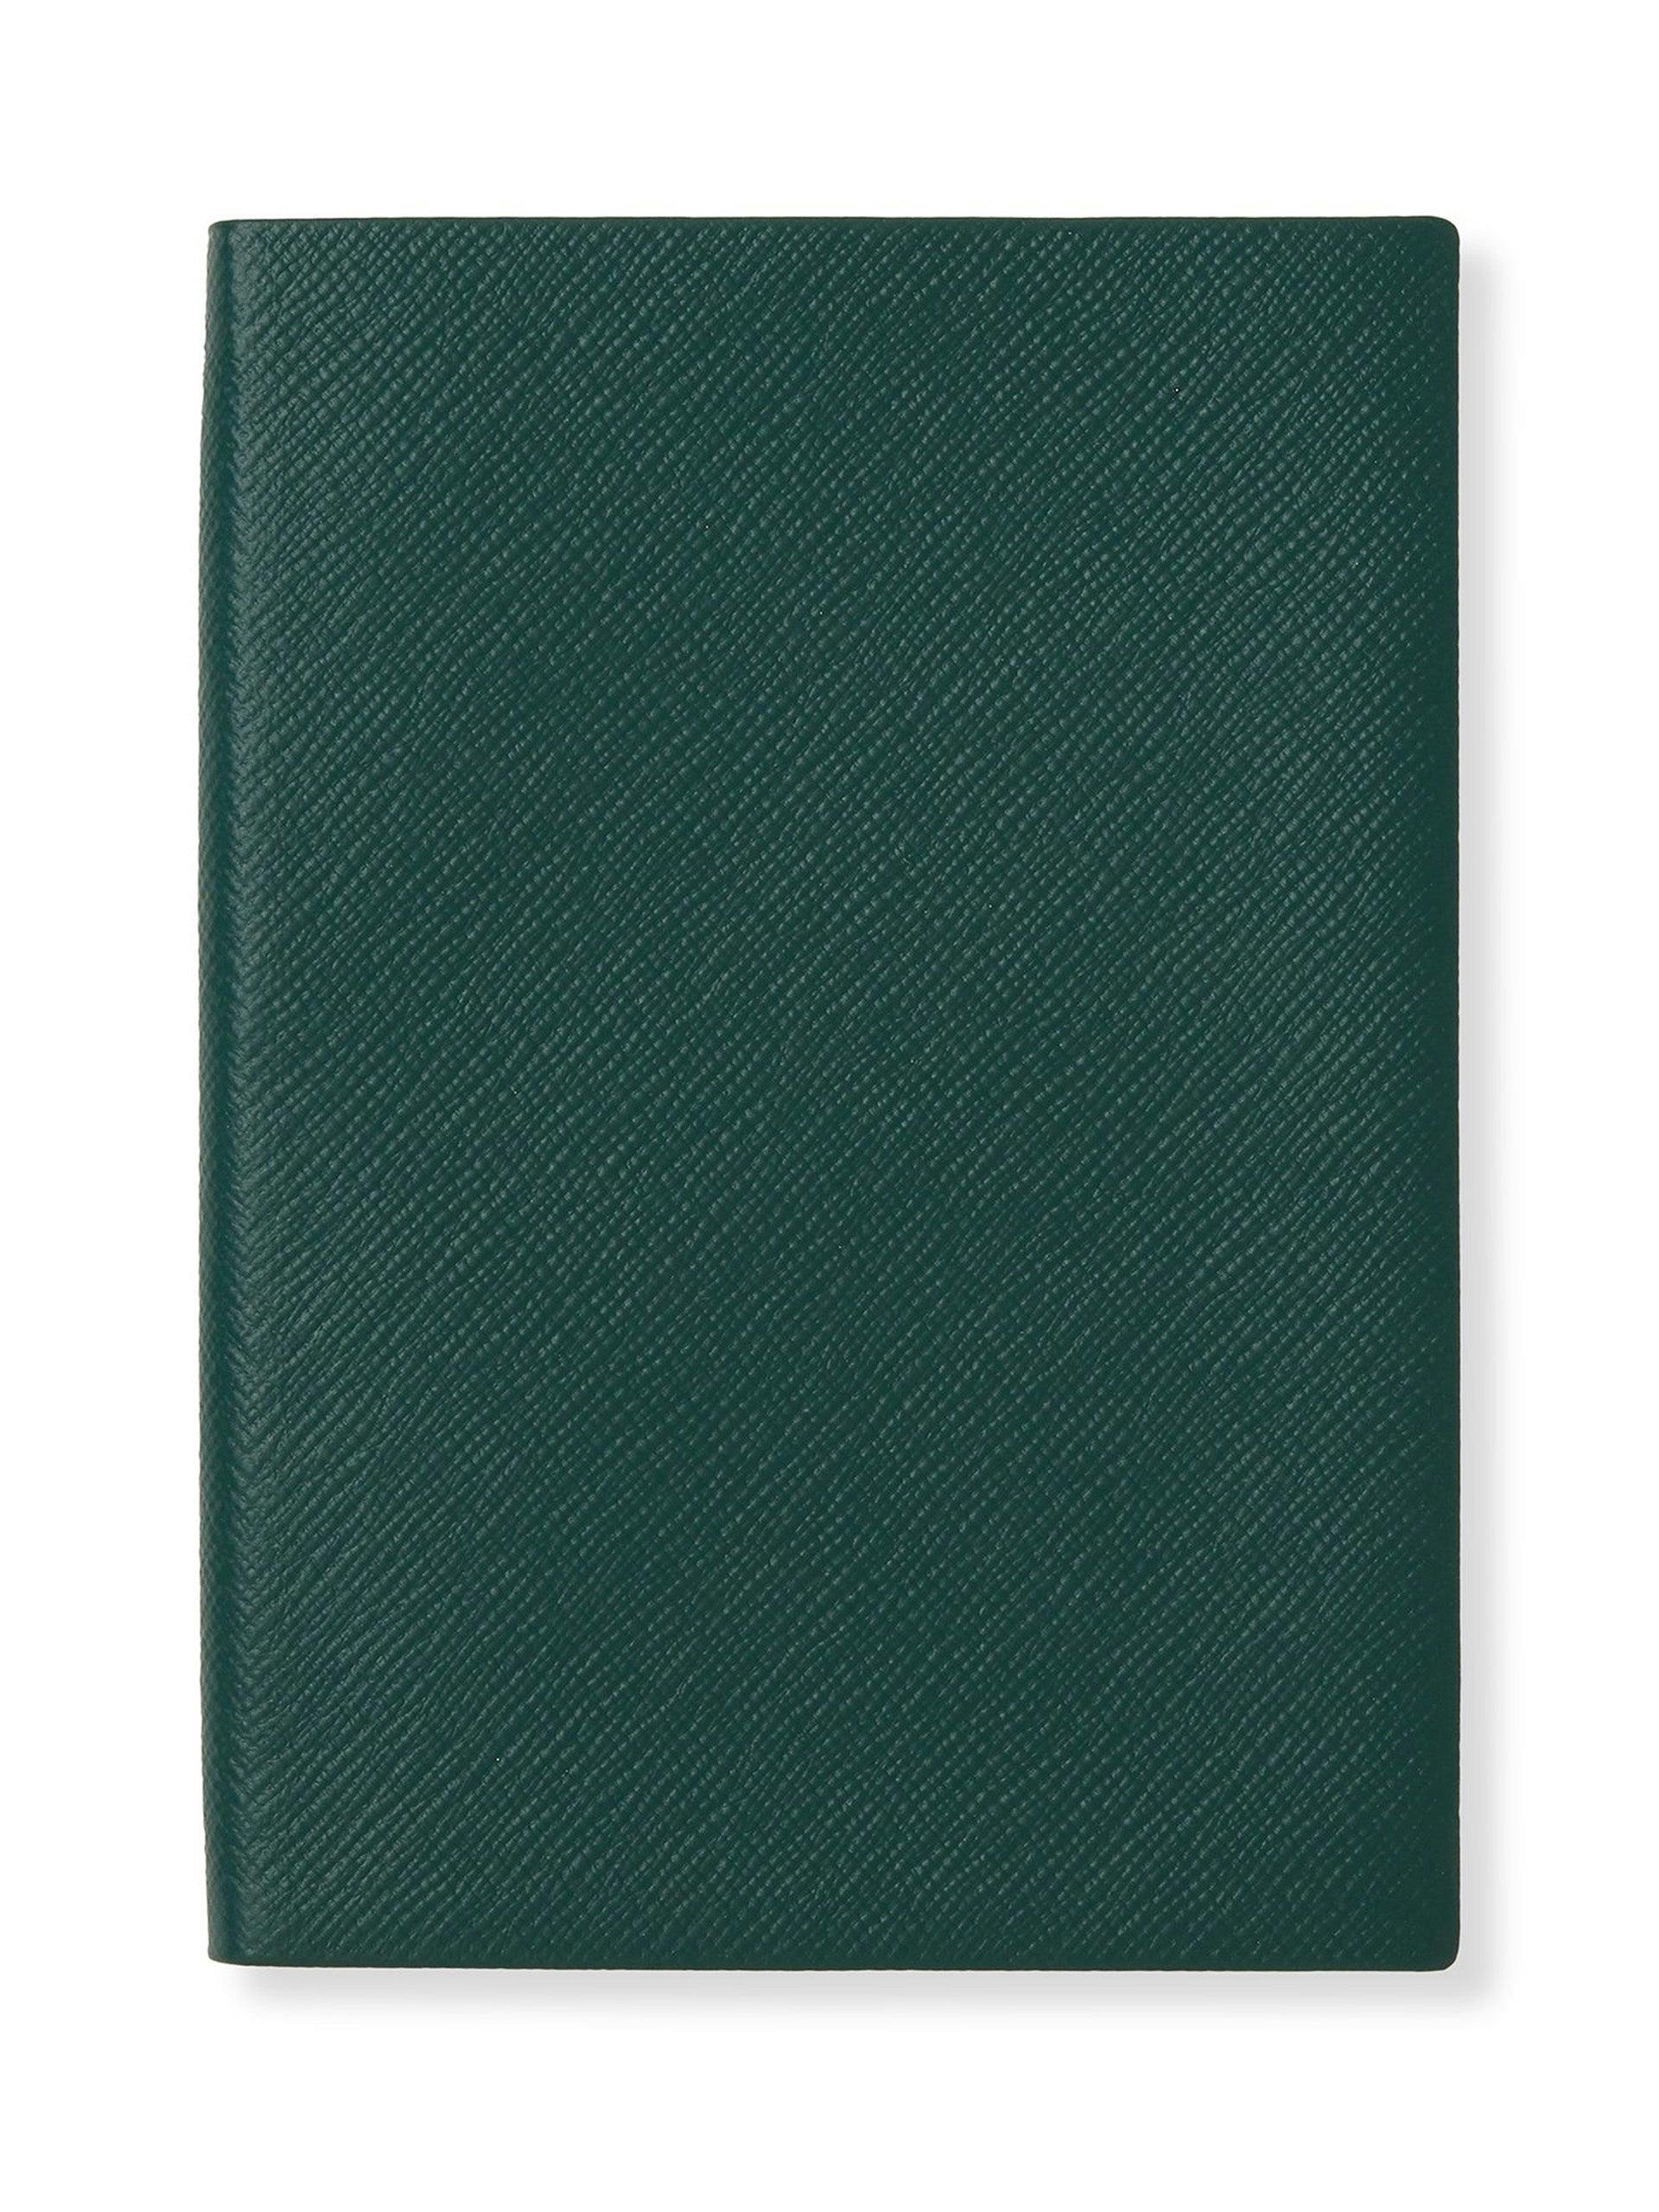 Forest Green Soho notebook